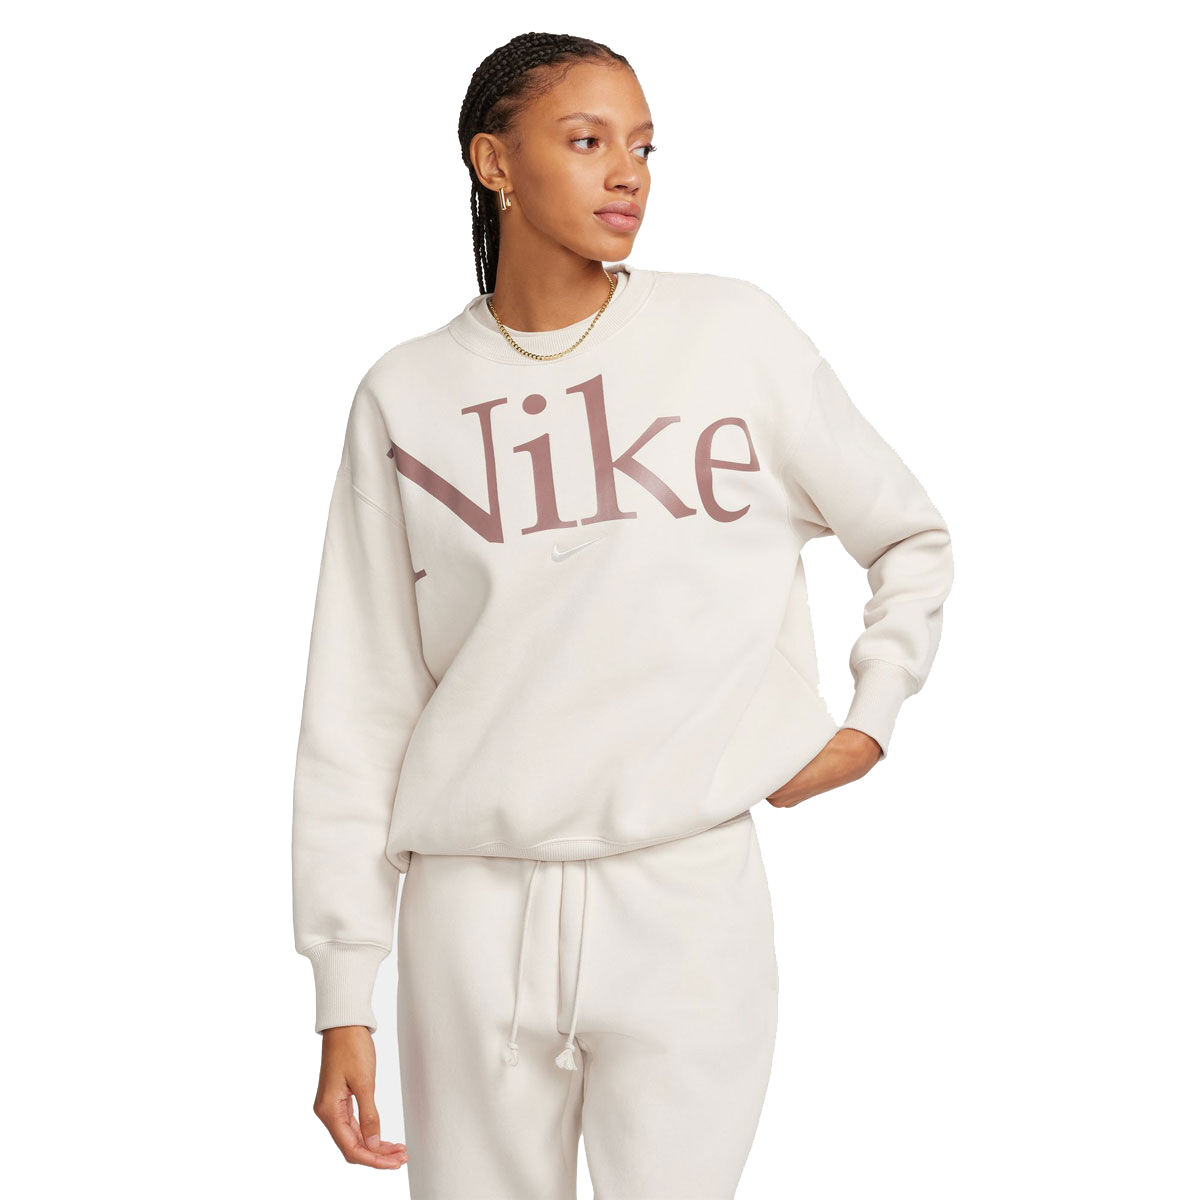 NWT $85 NIKE Sportswear Plush Women XL Mod Crop Crew-Neck Sweatshirt  Oversized